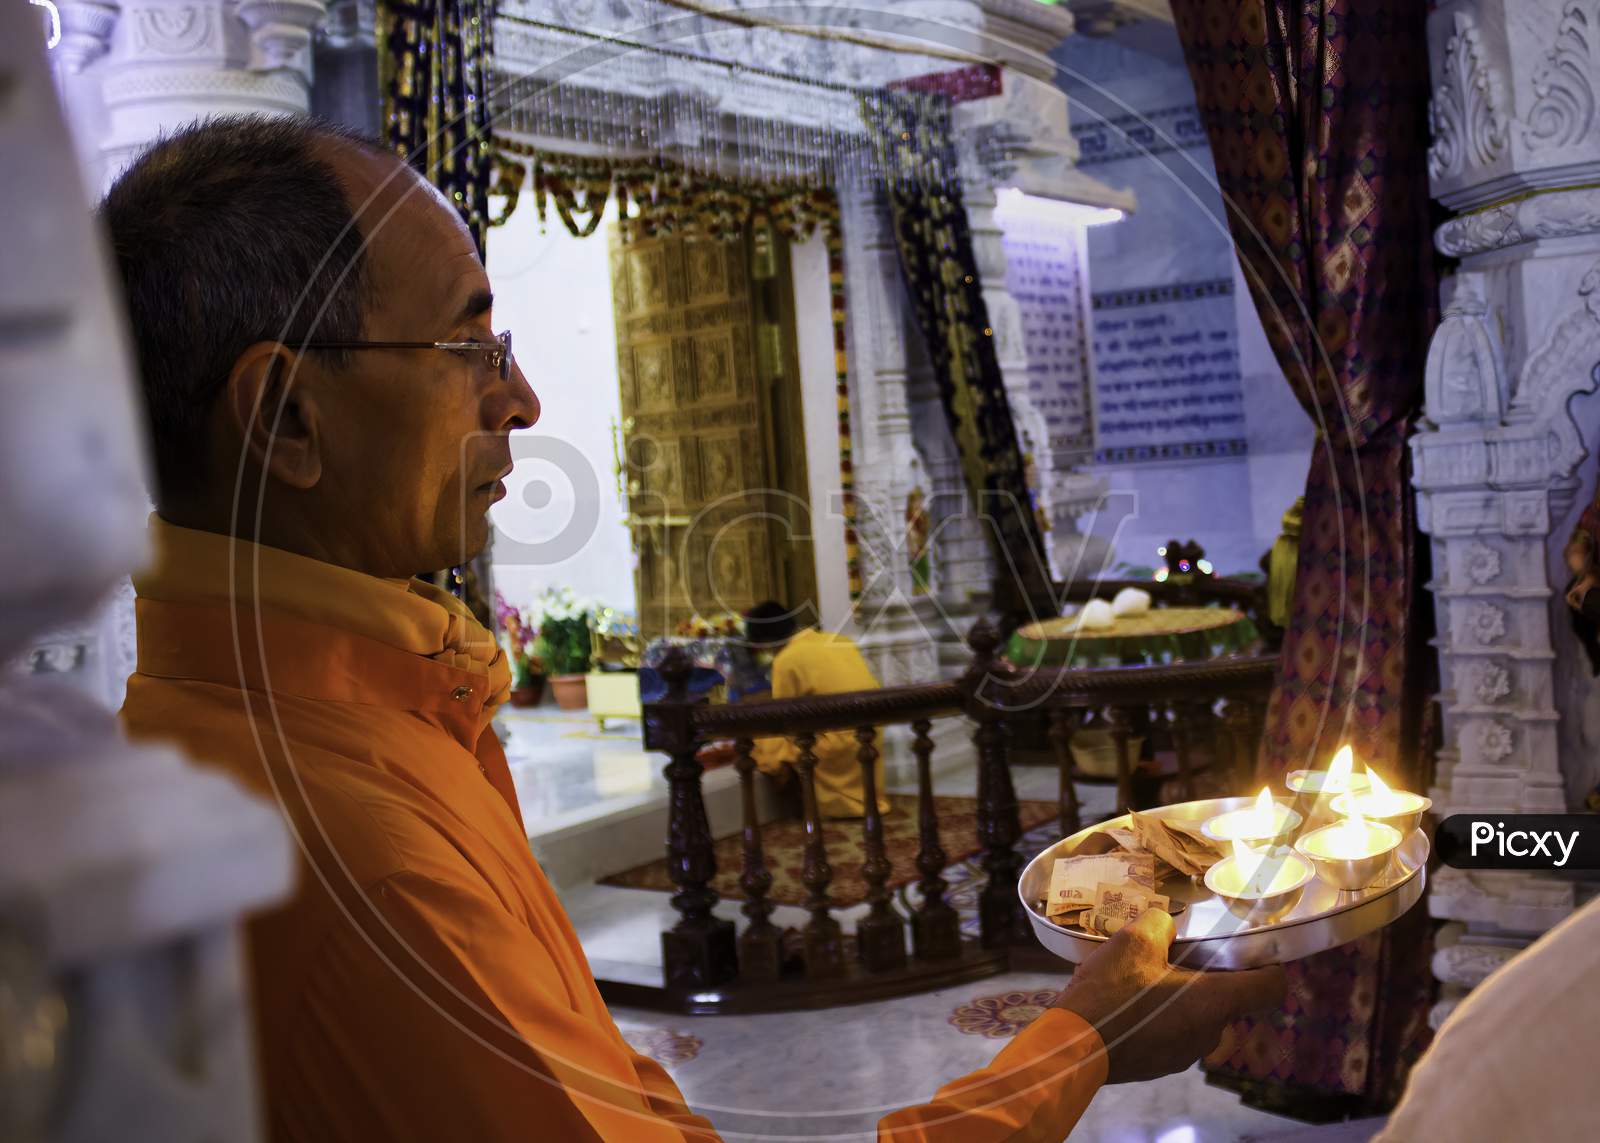 Mathura, India - April 11, 2014: Interior Of Prem Mandir (Love Temple) A Hindu Temple In Vrindavan. A Priest ( Pandit ) Can Be Seen Praying And Performing Rituals.